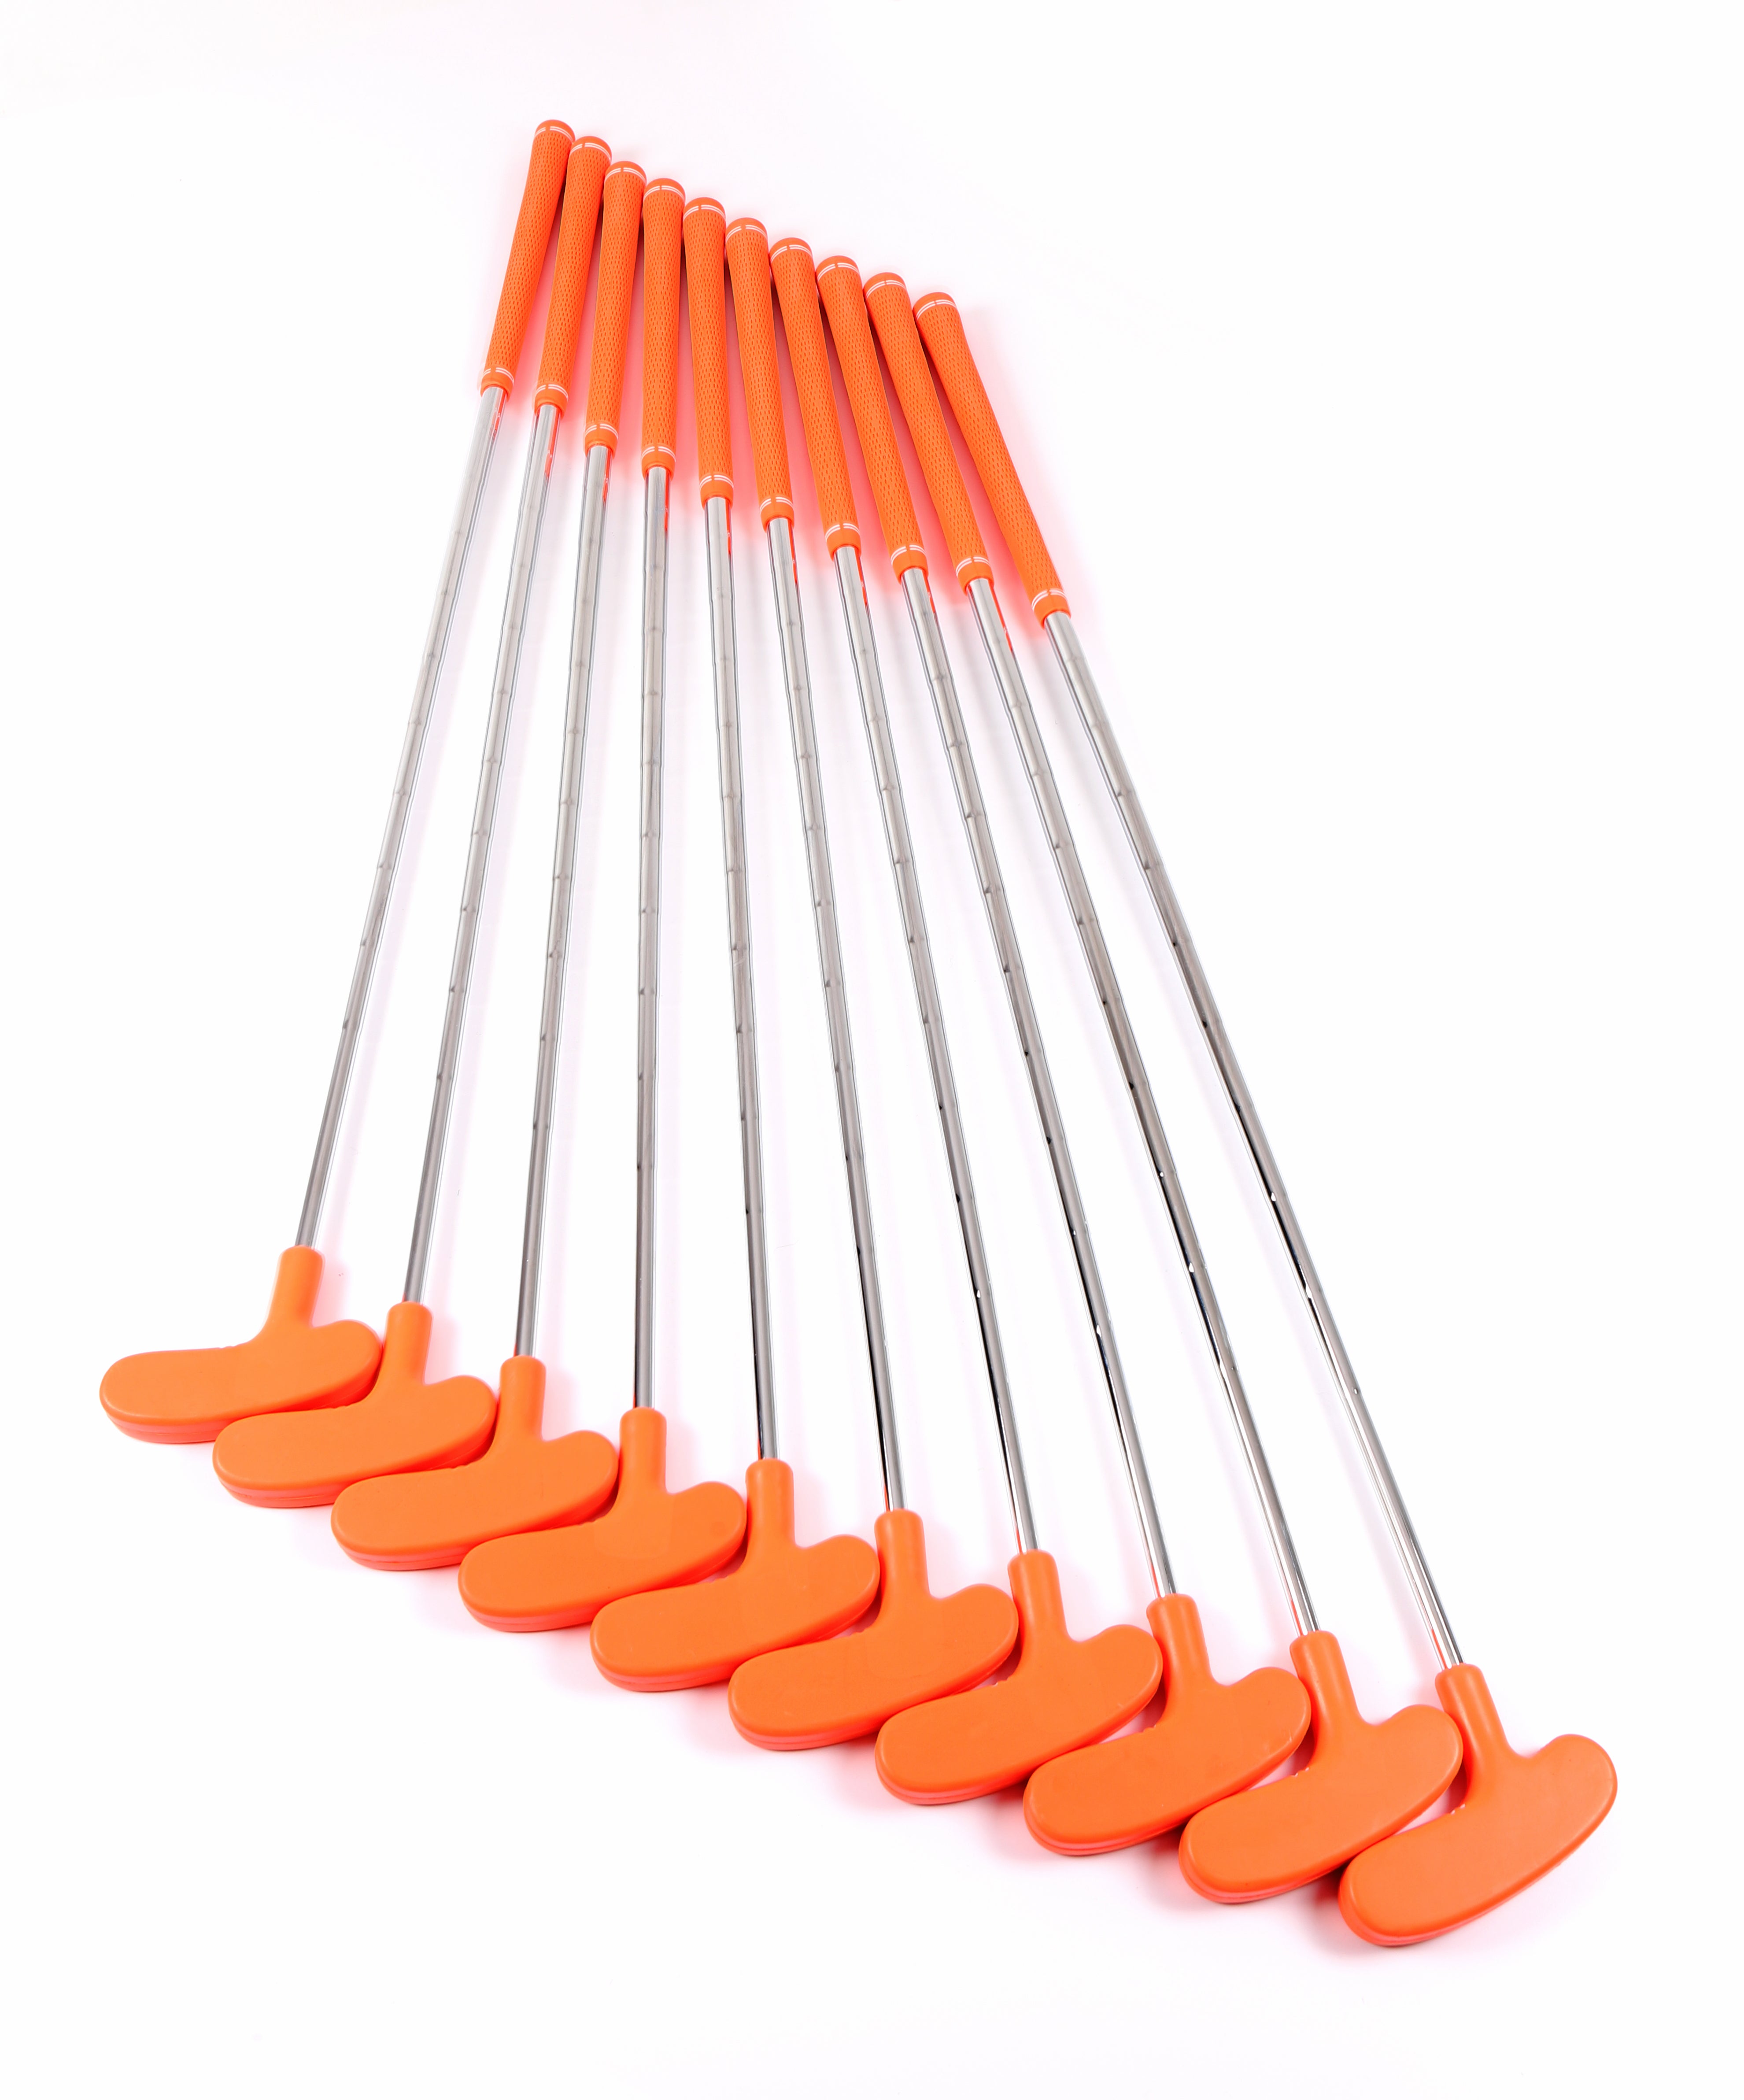 UV Adult Mini Golf Putters bundle of 10 x 35" putters in Citrus Glow